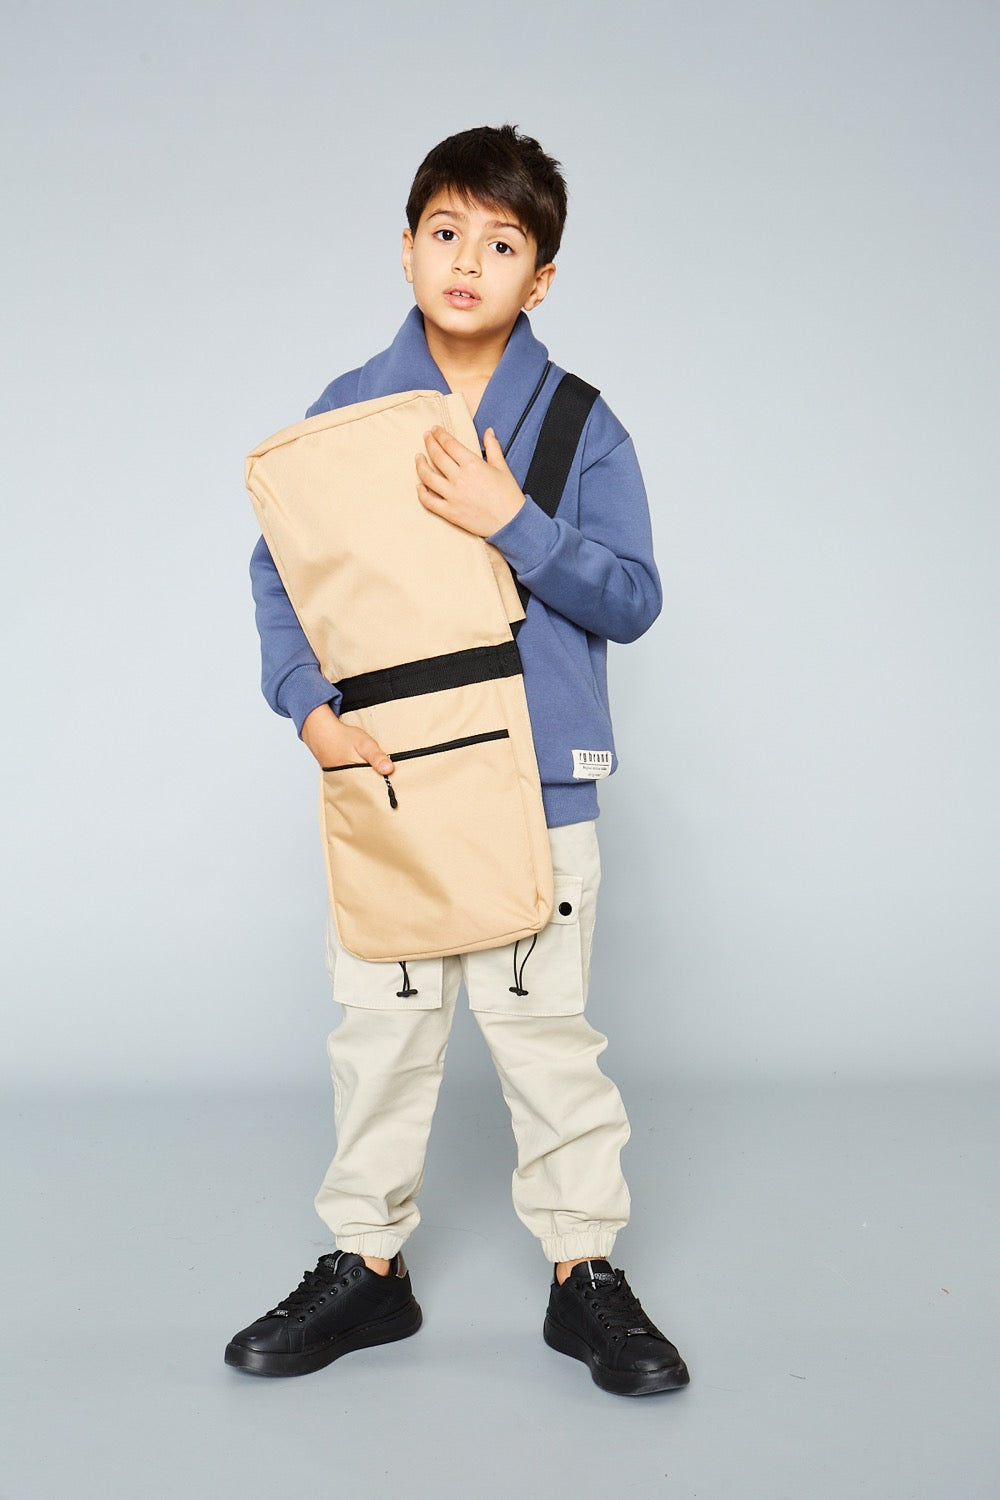 Children's Single Strap Useful Bag